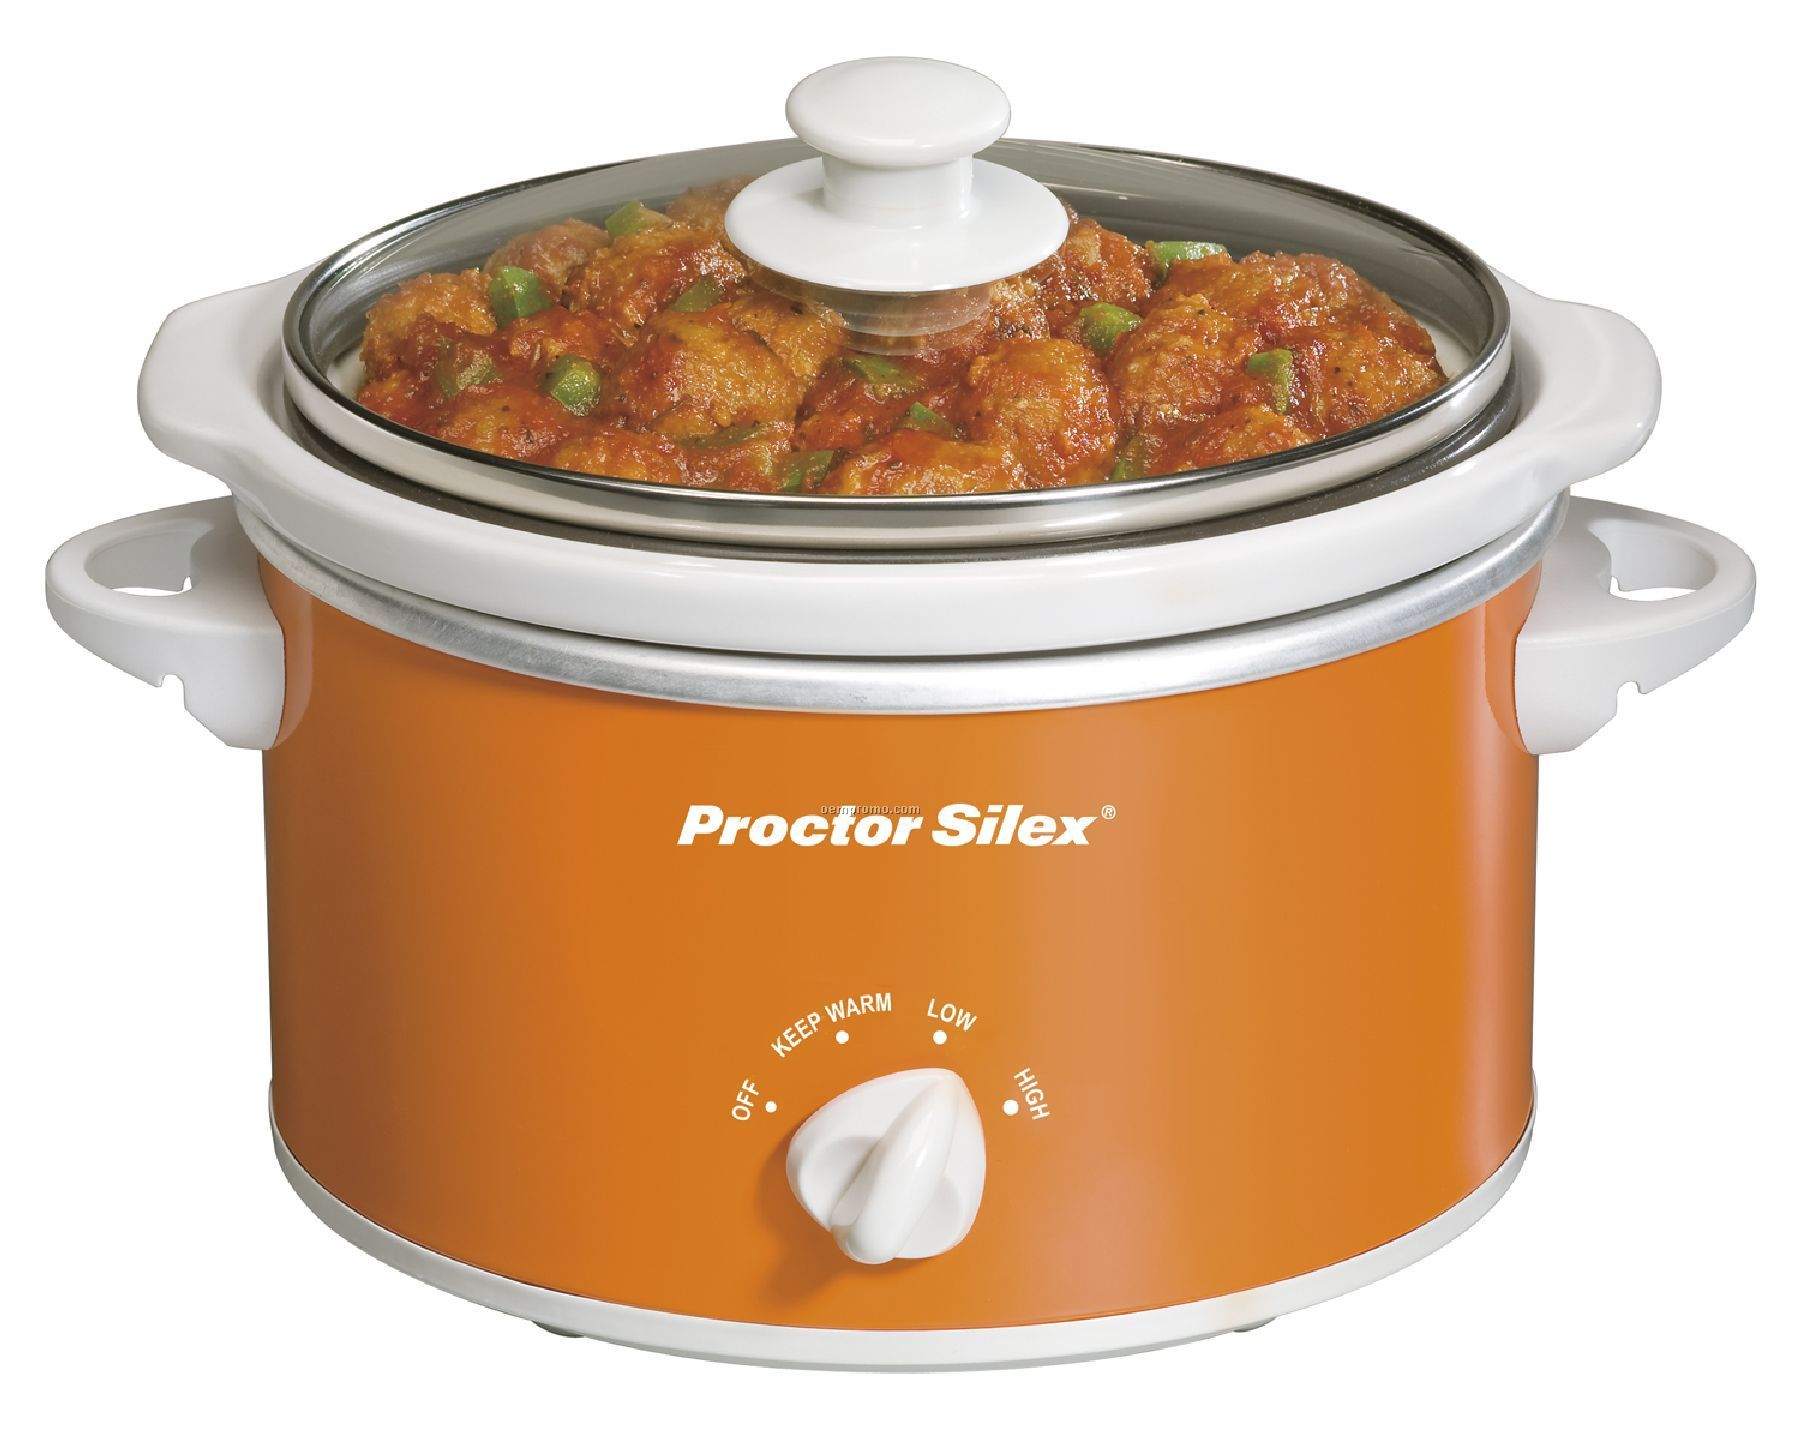 Proctor Silex - Slow Cookers - 1.5 Qt Ovl Ltch Strp/Gsk-orange